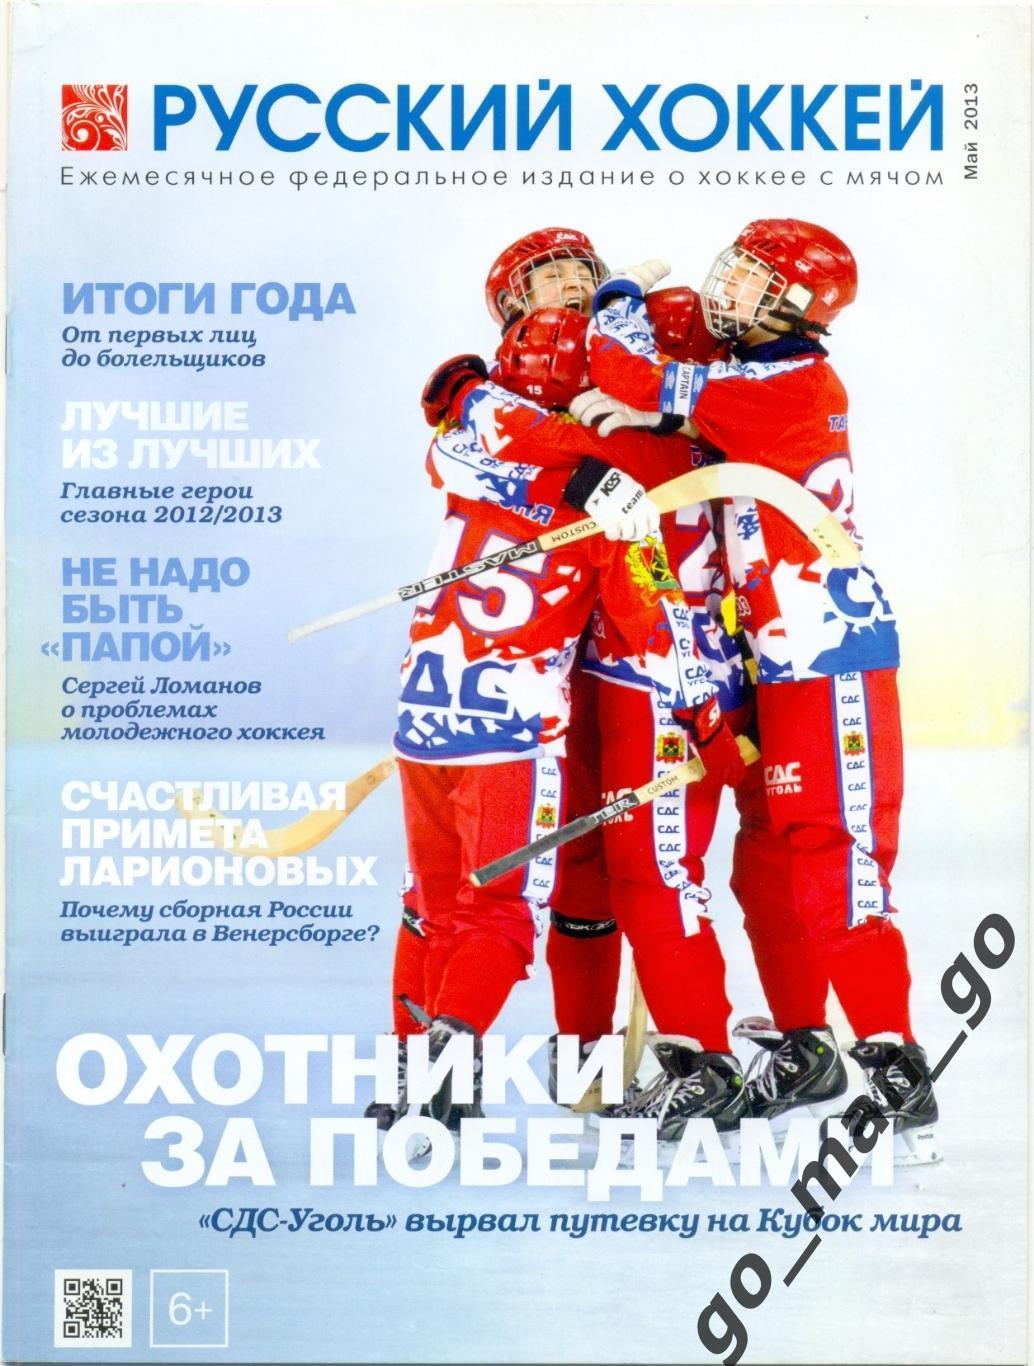 Журнал РУССКИЙ ХОККЕЙ, май 2013.